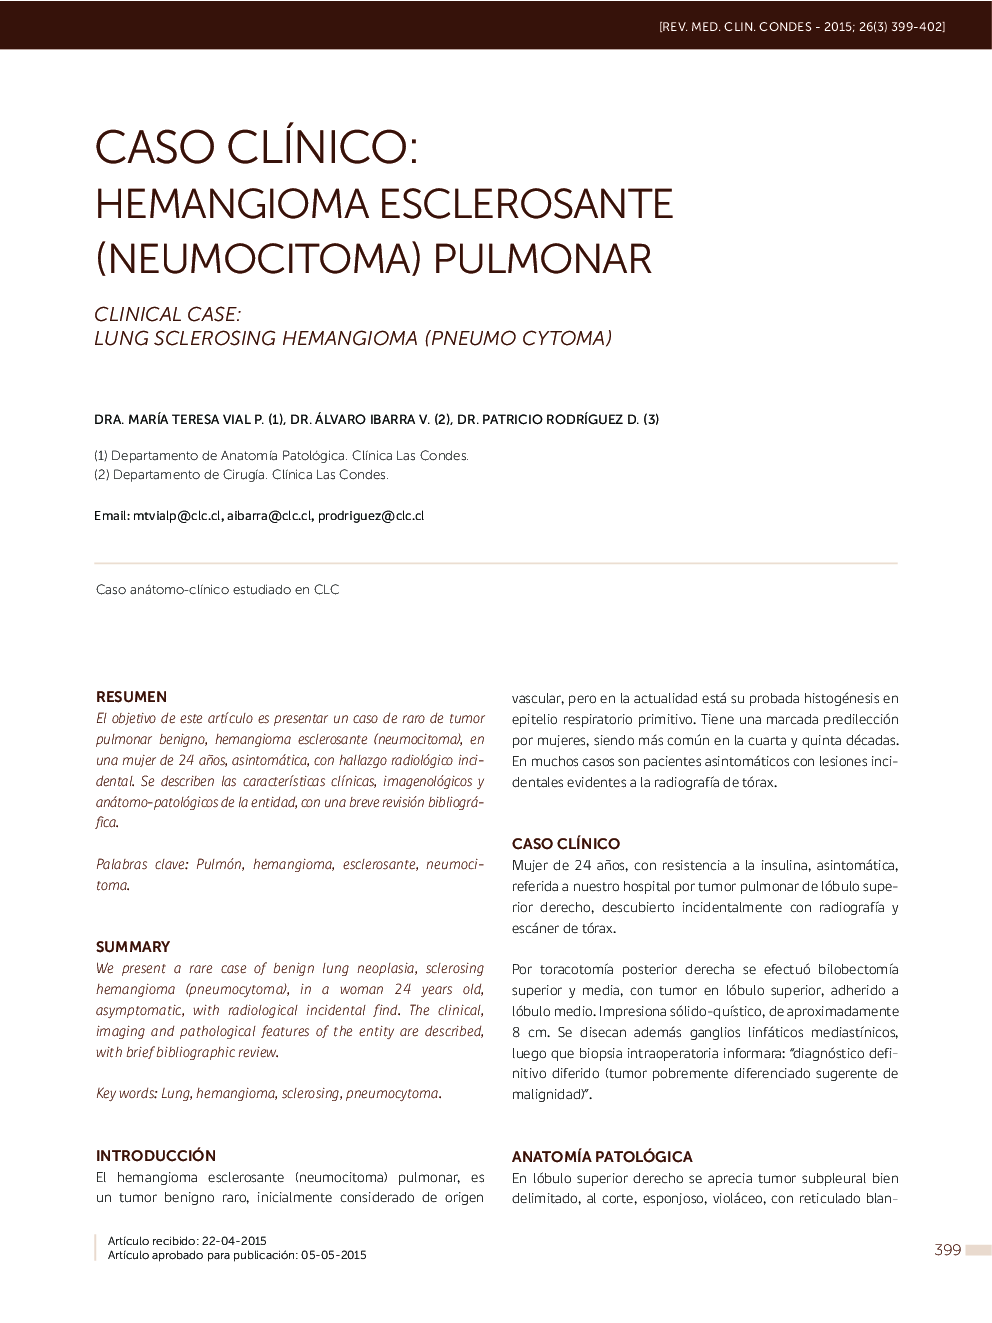 CASO CLÍNICO: HEMANGIOMA ESCLEROSANTE (NEUMOCITOMA) PULMONAR